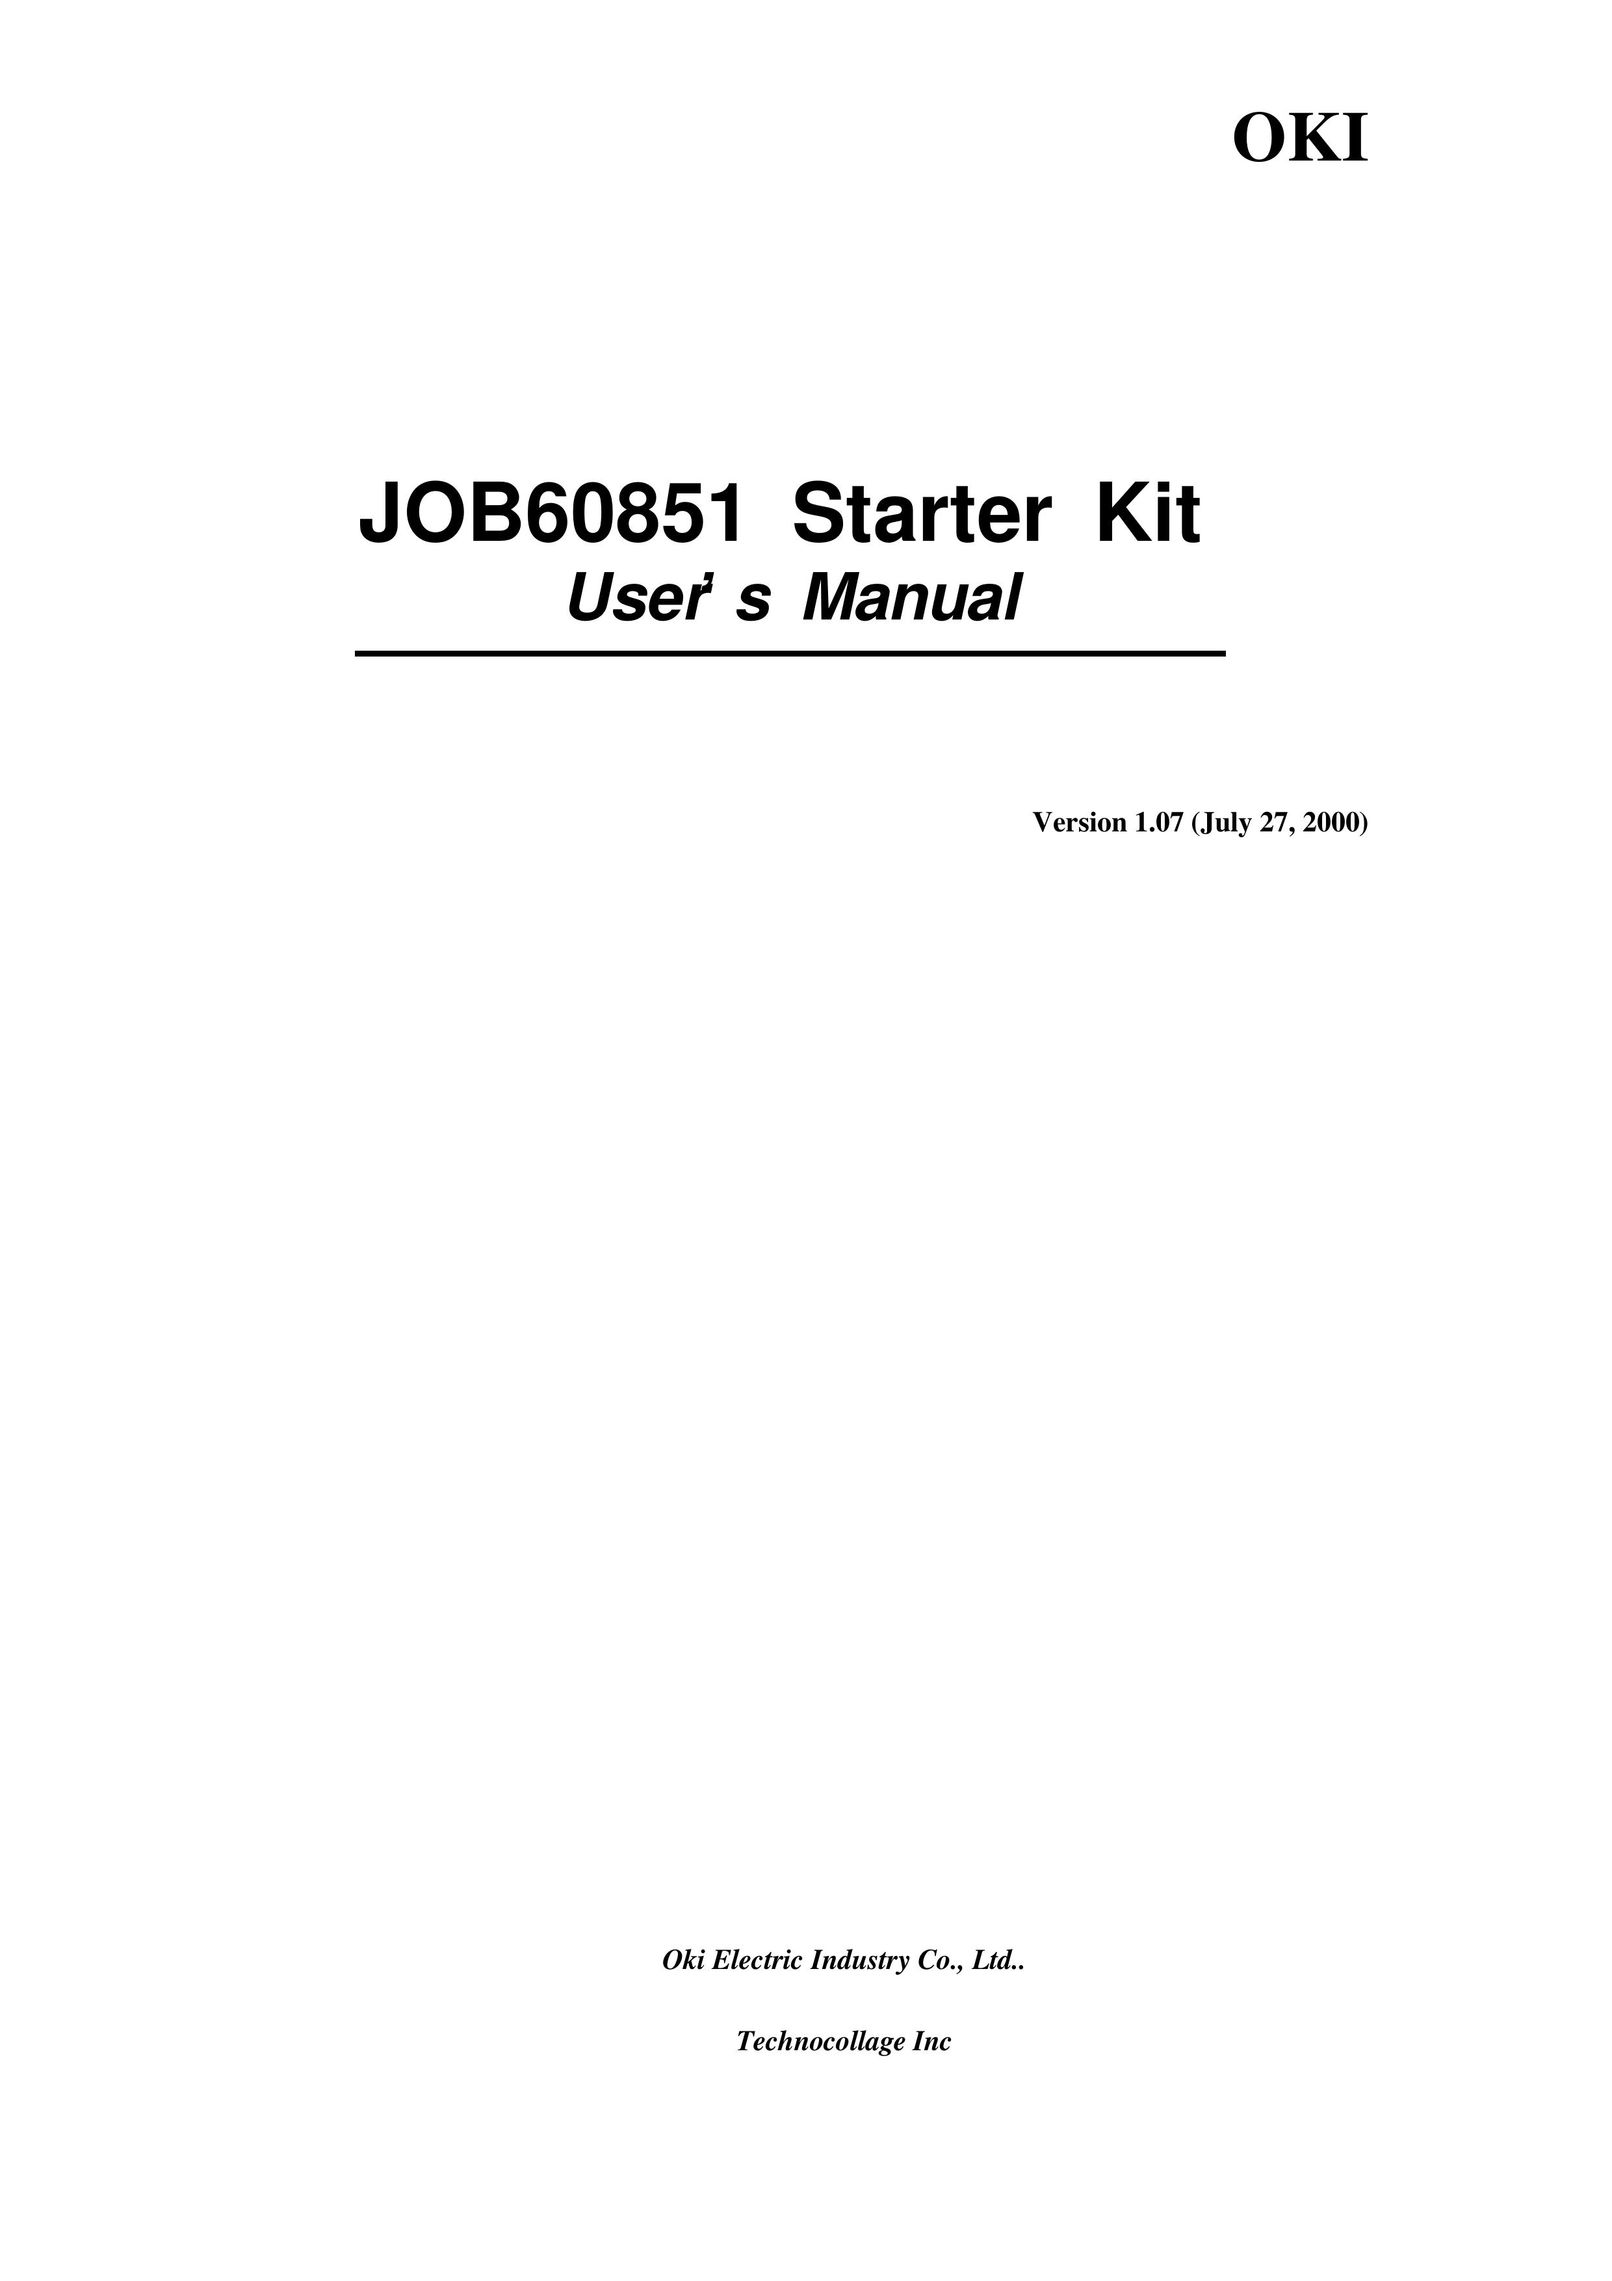 Oki JOB60851 Network Card User Manual